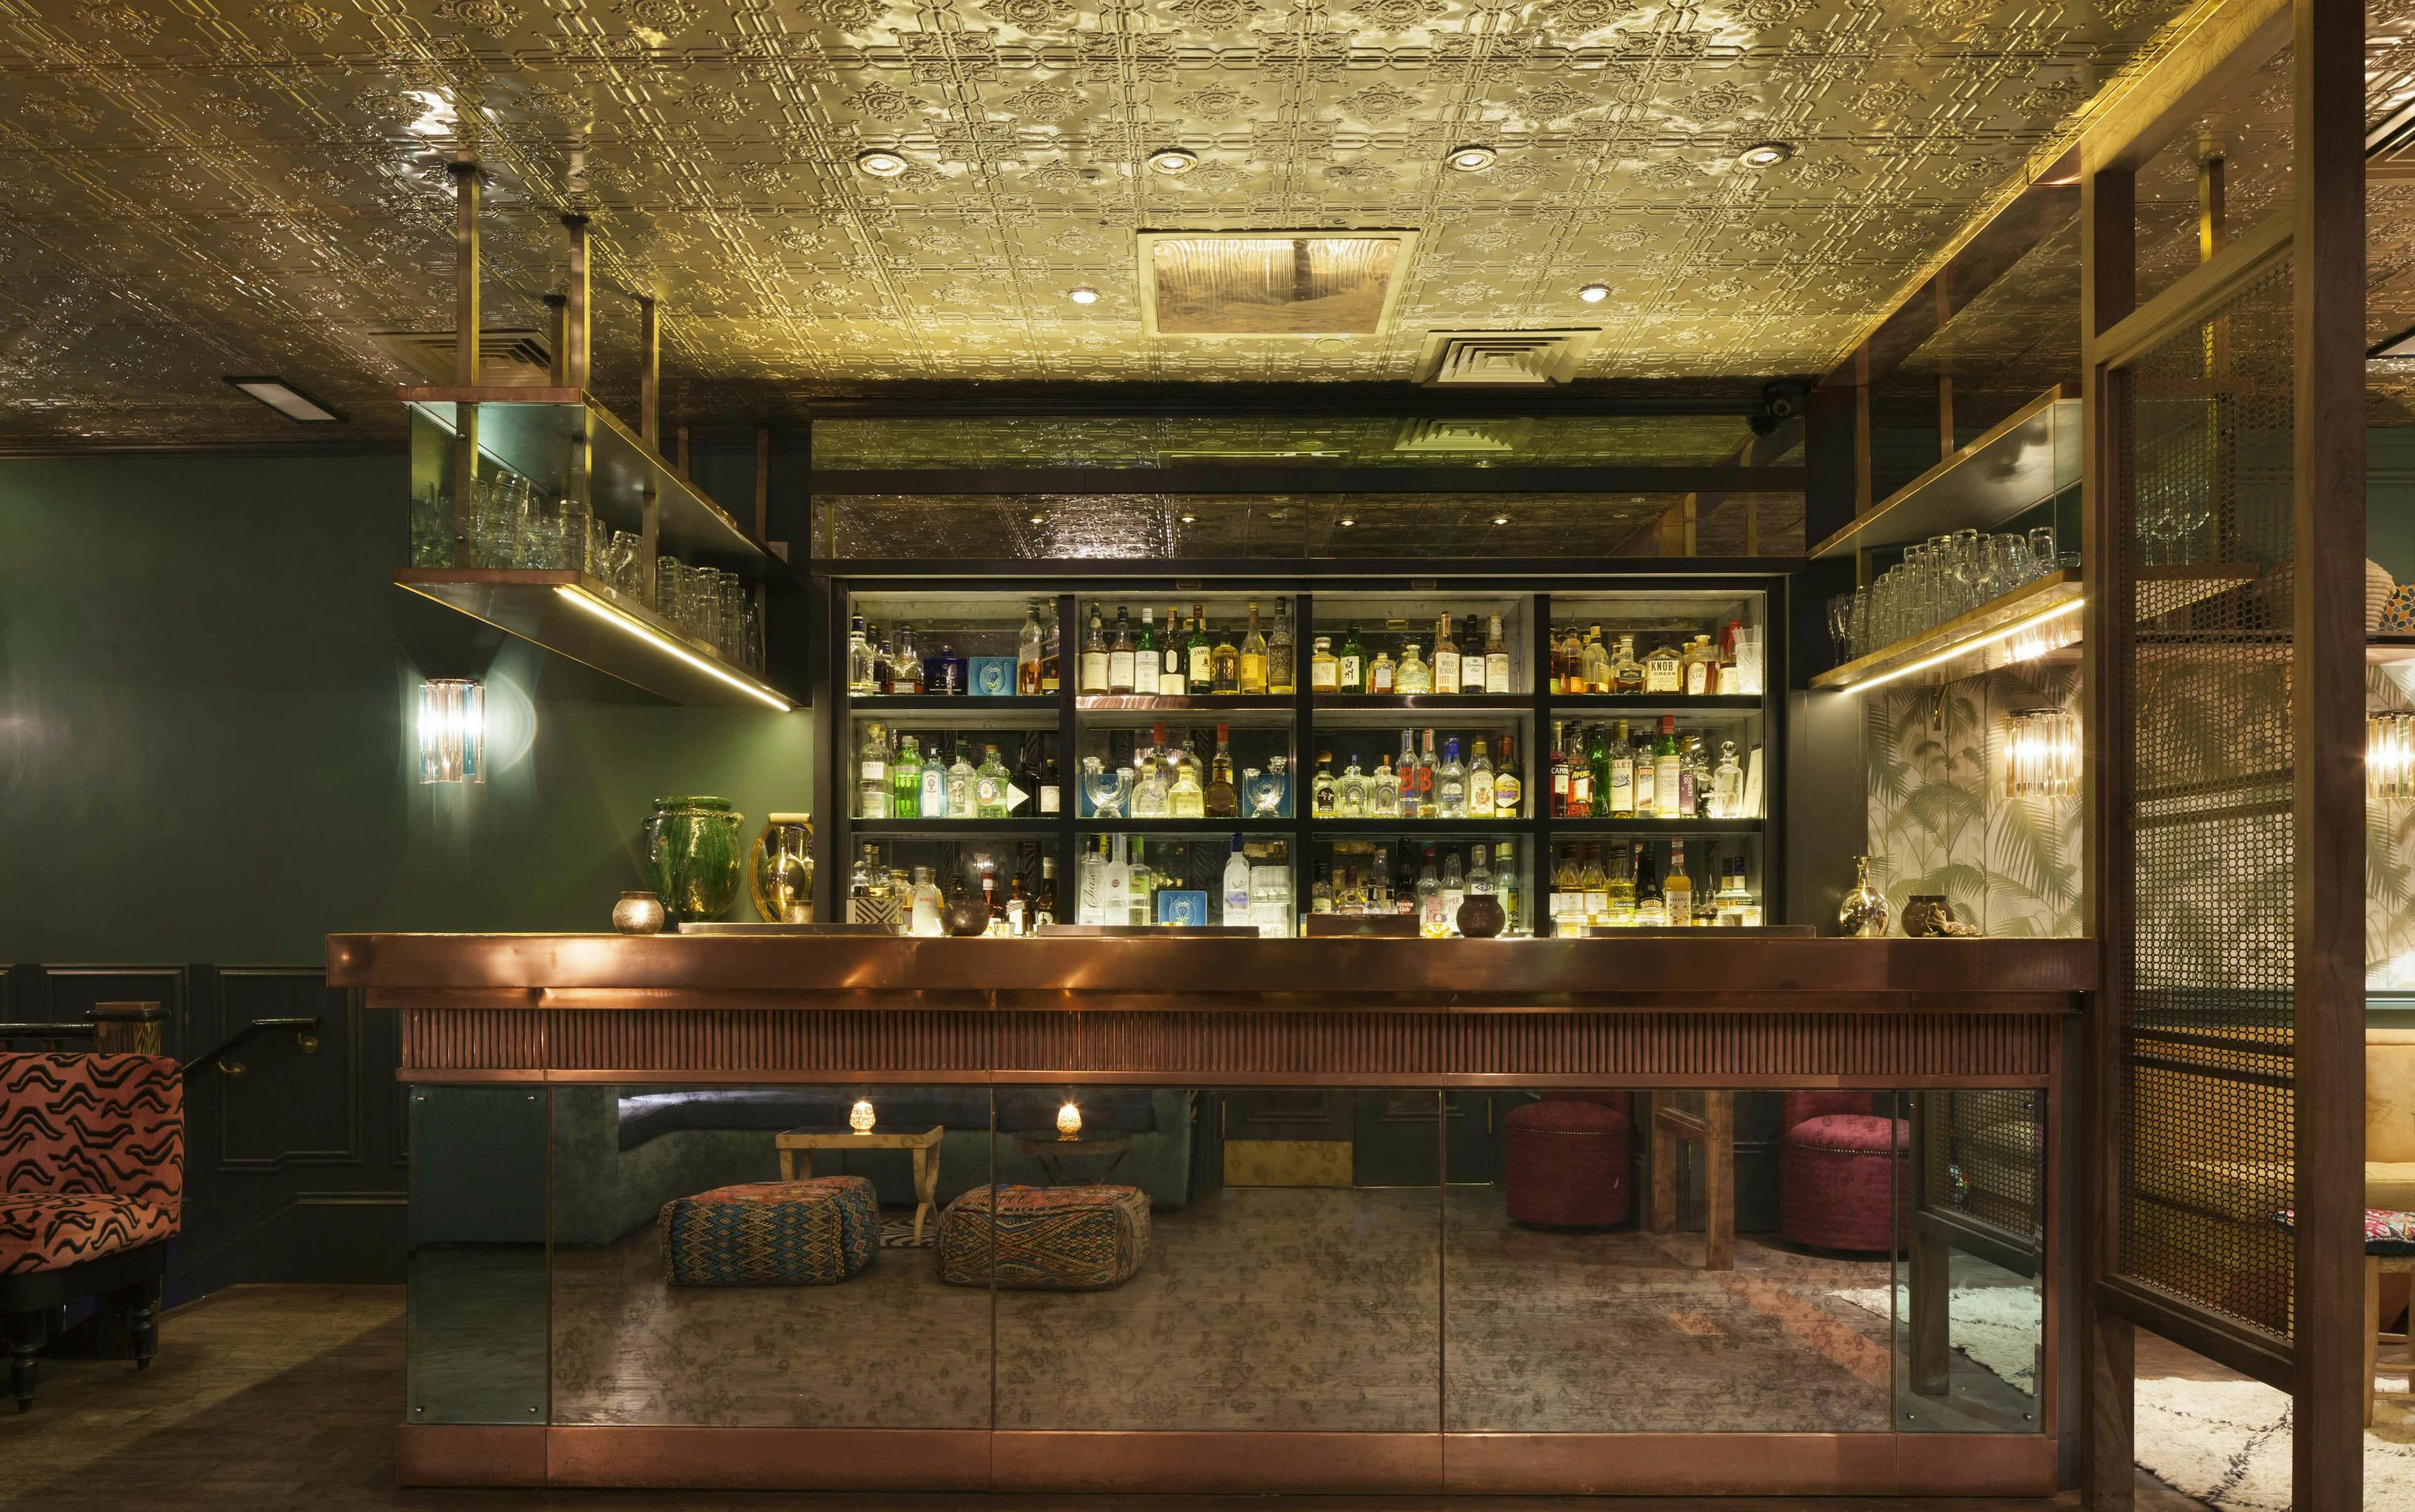 The Scotch of St James - Lounge Bar image 1